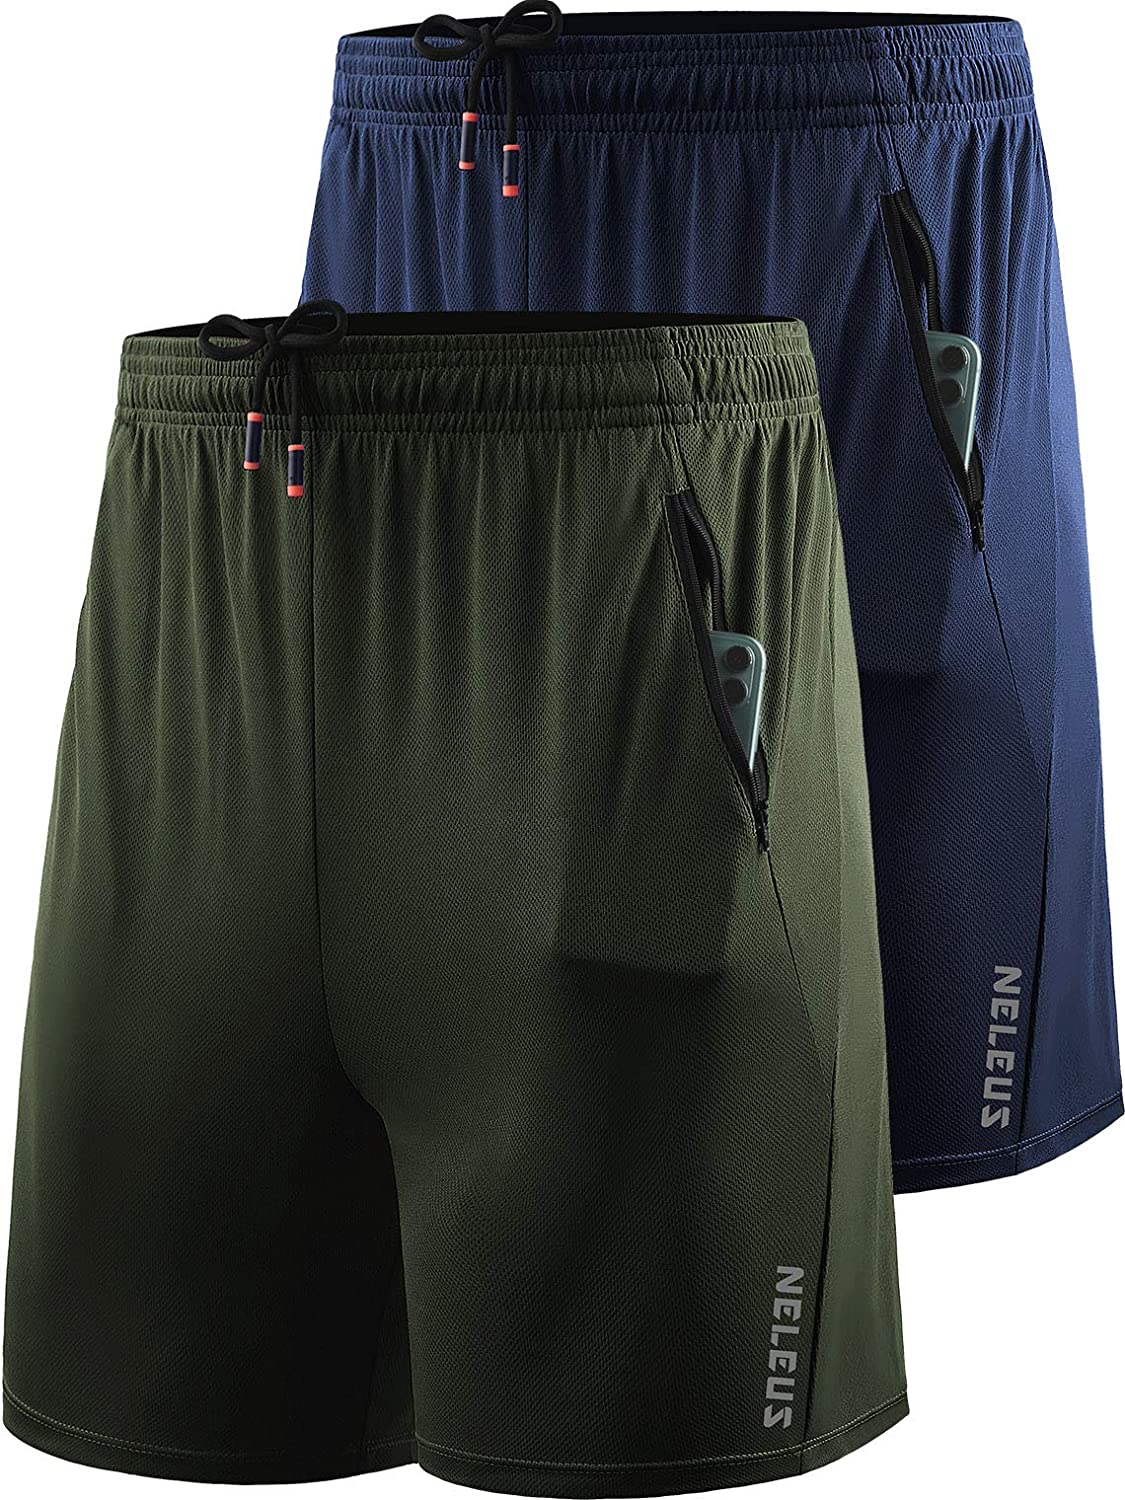 Neleus Men's 7 inch Running Shorts Lightweight Workout Shorts with Pockets 